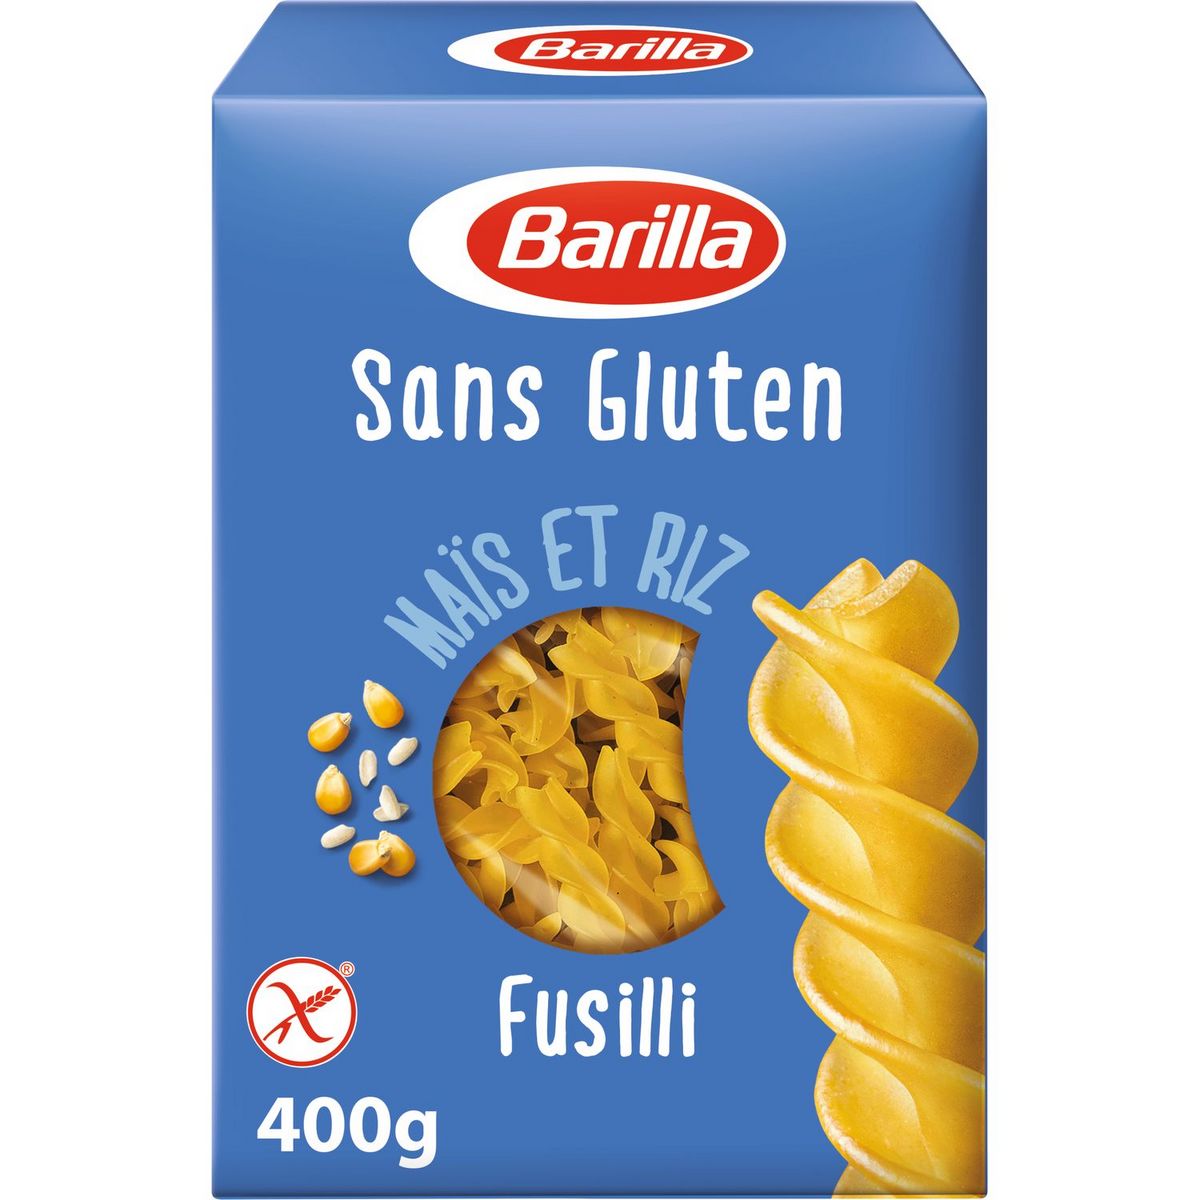 https://swidis.fr/wp-content/uploads/2022/08/image-BARILLA-Sans-gluten-Fusilli-400g.jpg